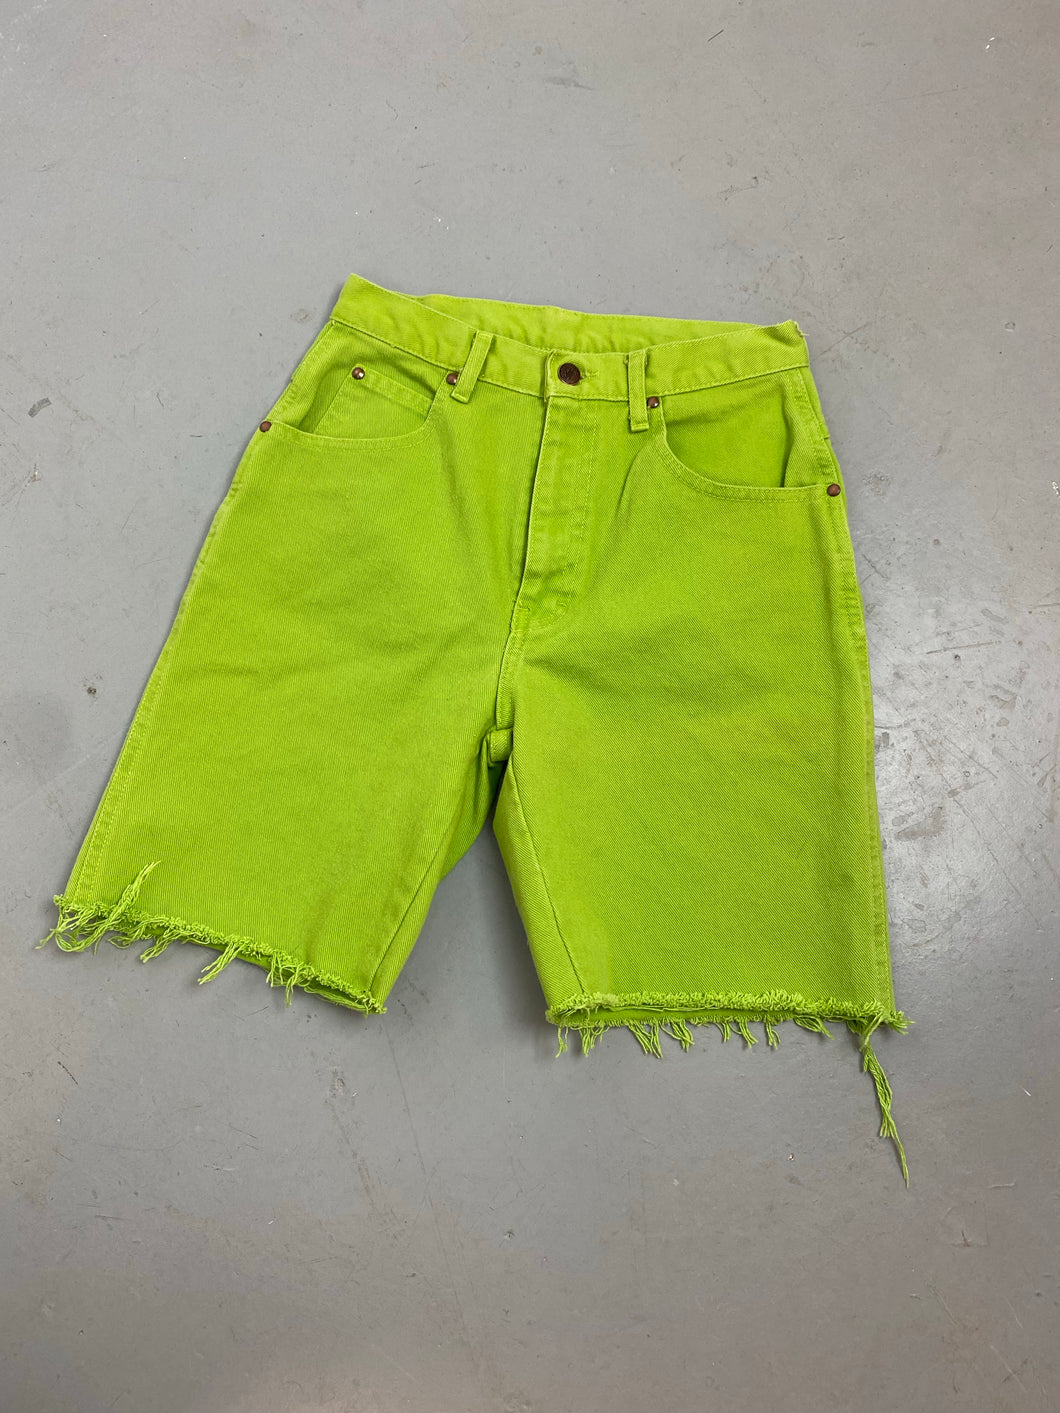 Mint green frayed high waisted denim shorts